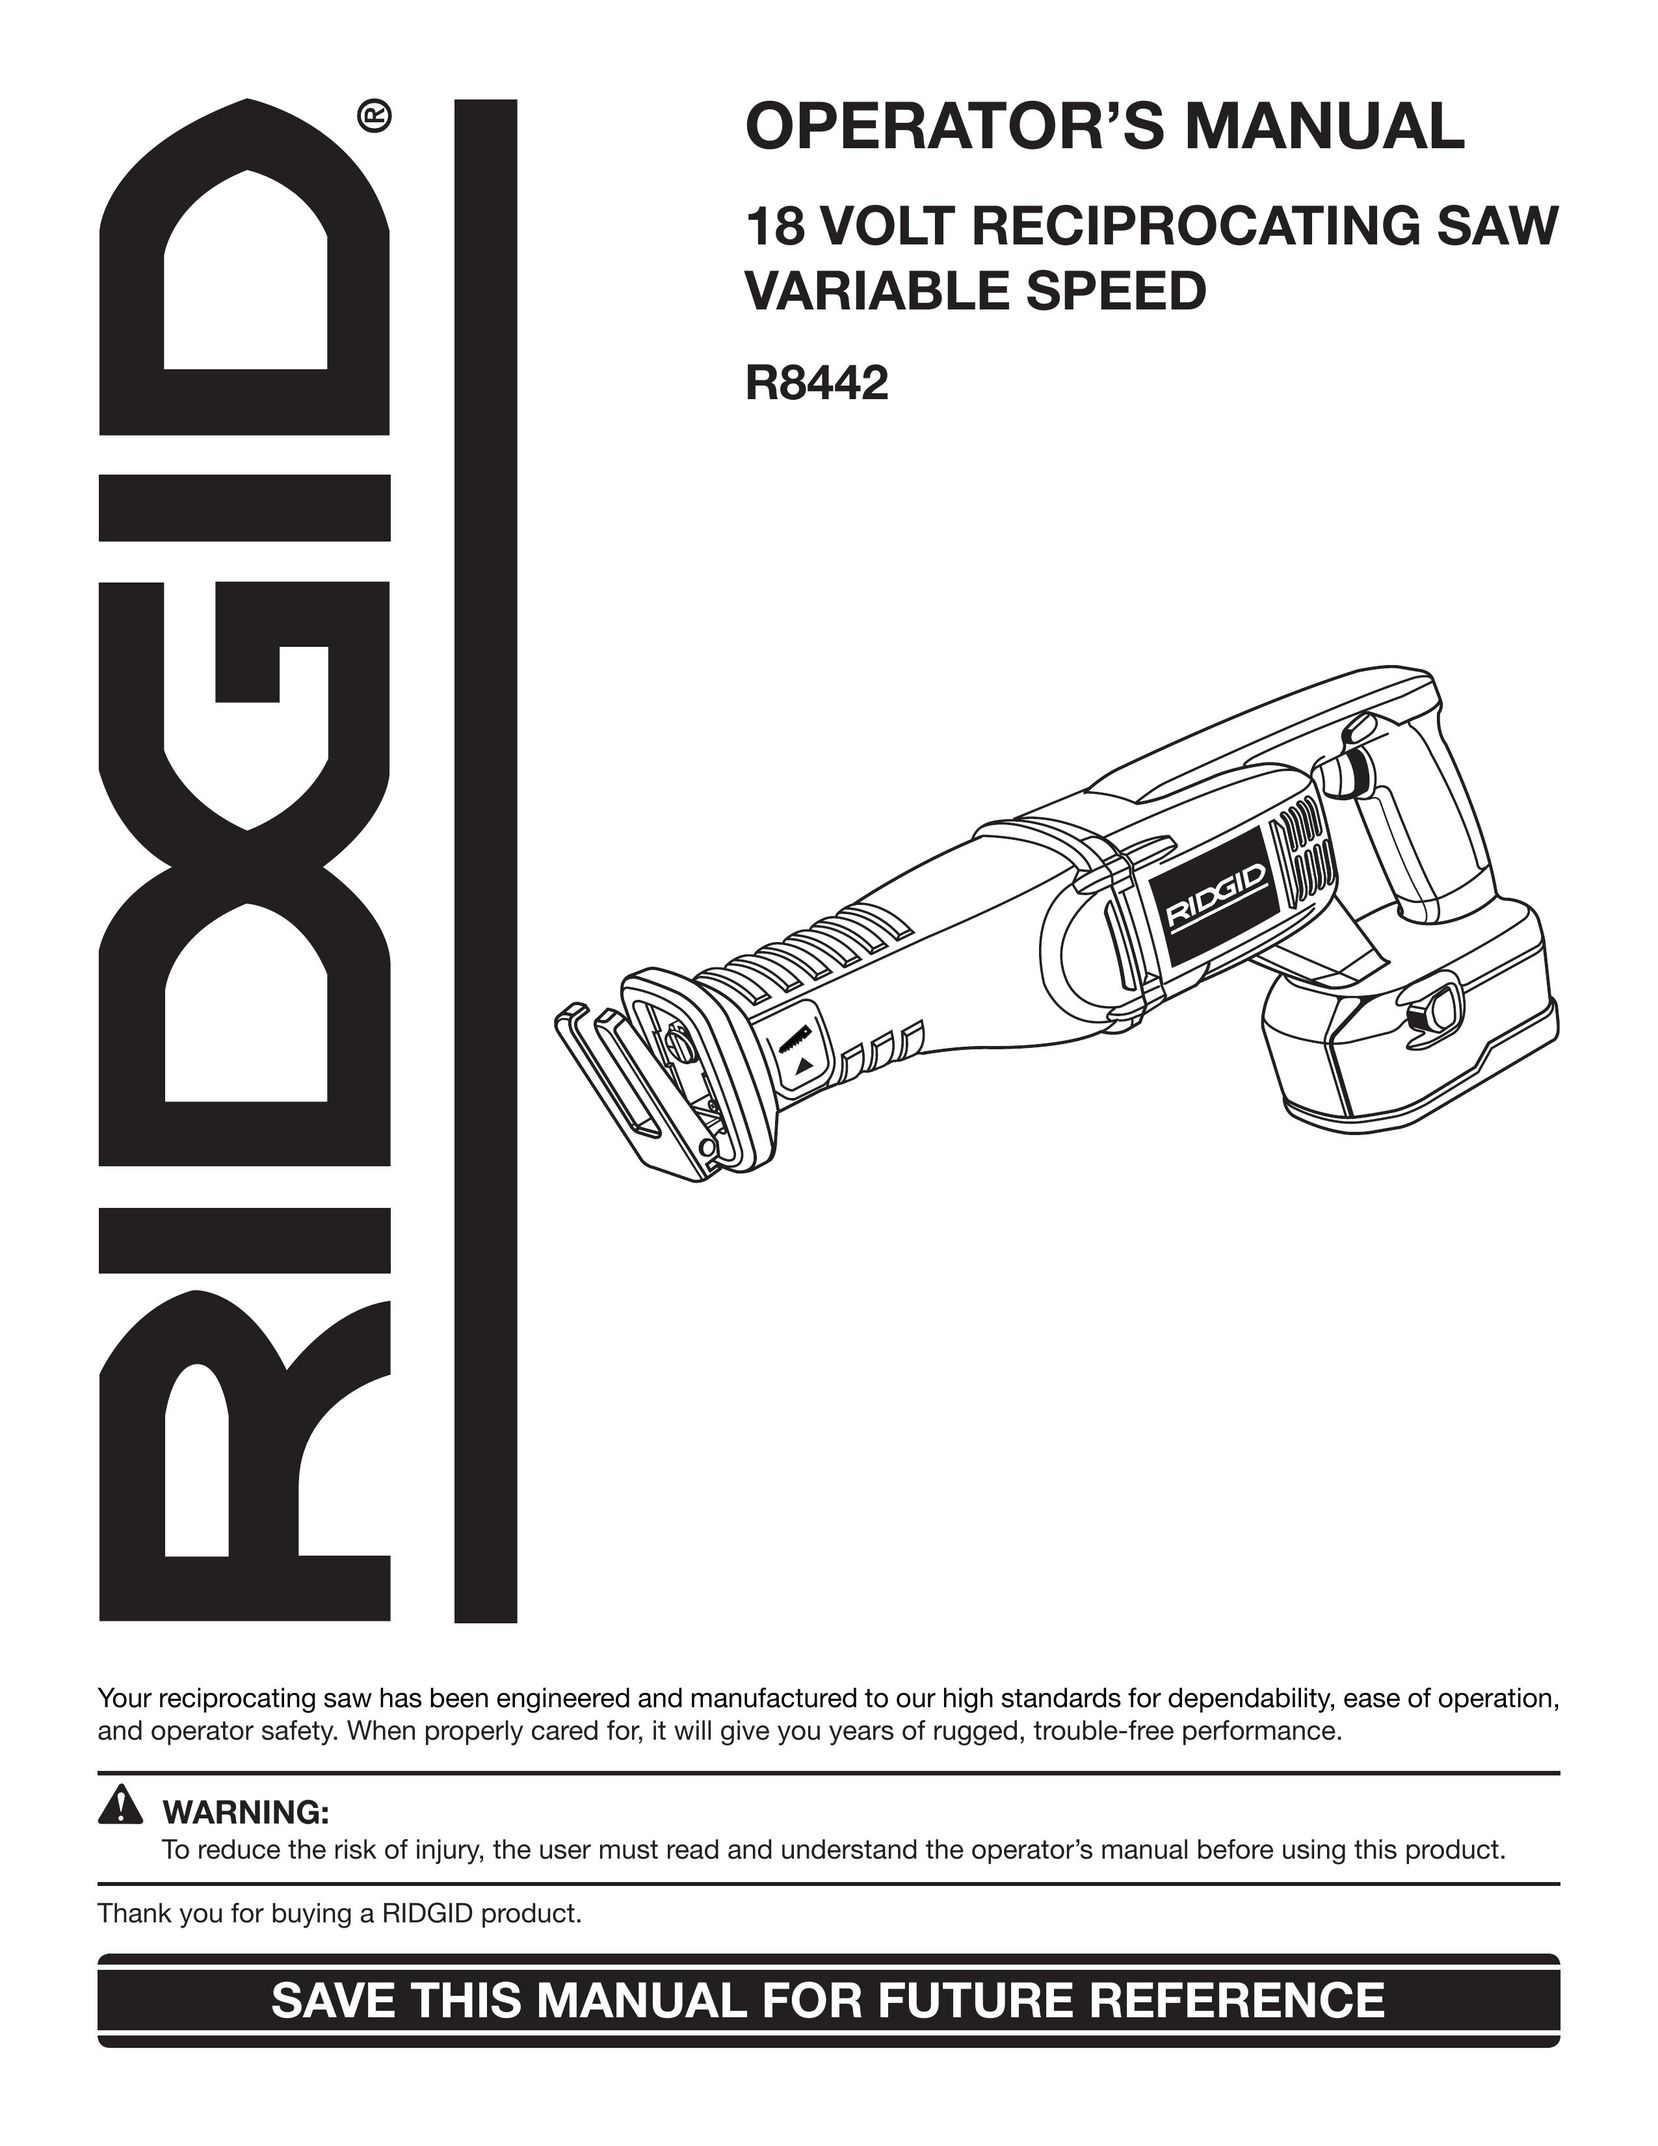 RIDGID R8442 Cordless Saw User Manual